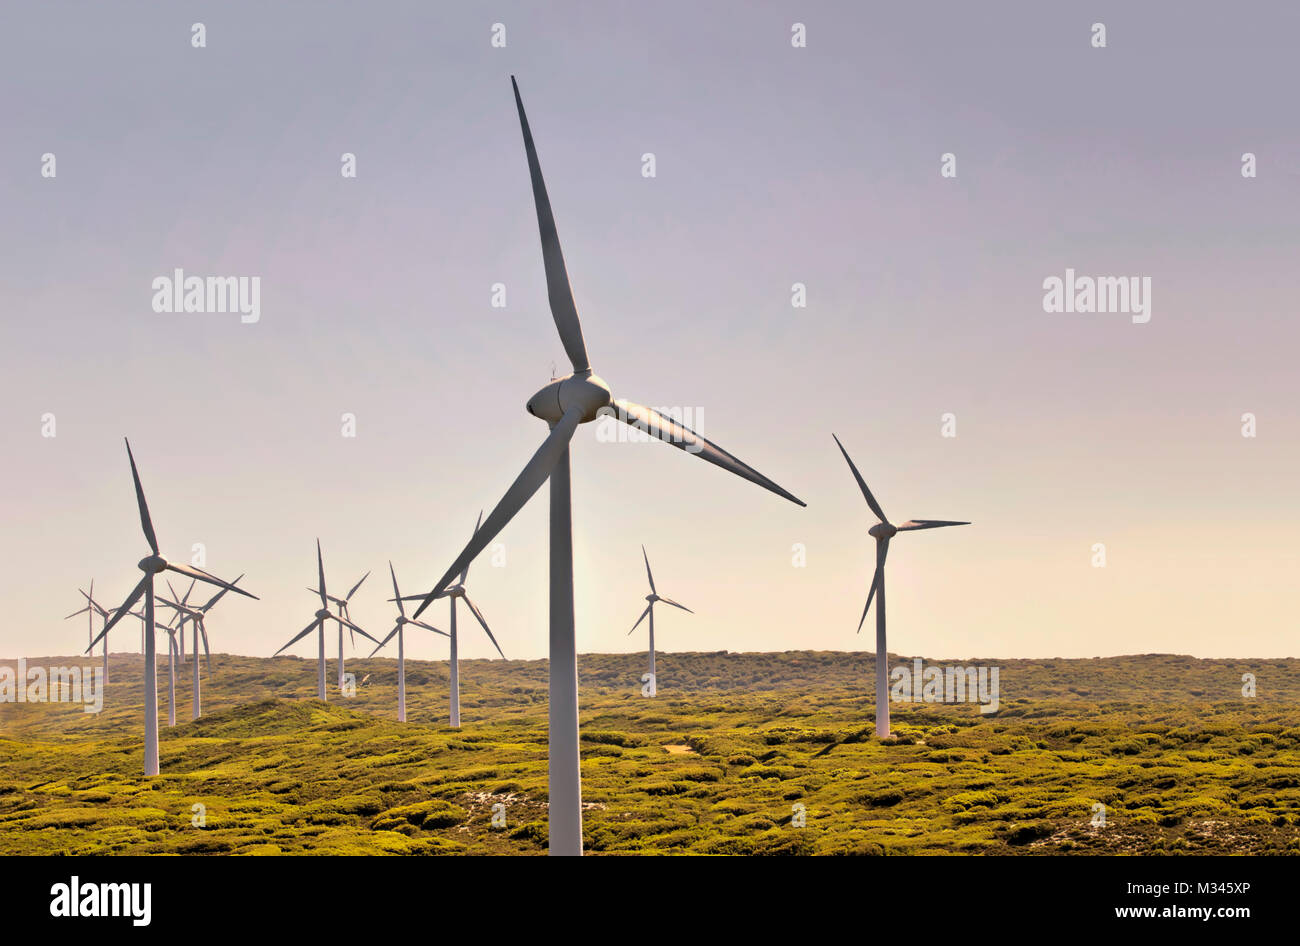 Wind turbines on a wind farm, Albany, Western Australia, Australia Stock Photo